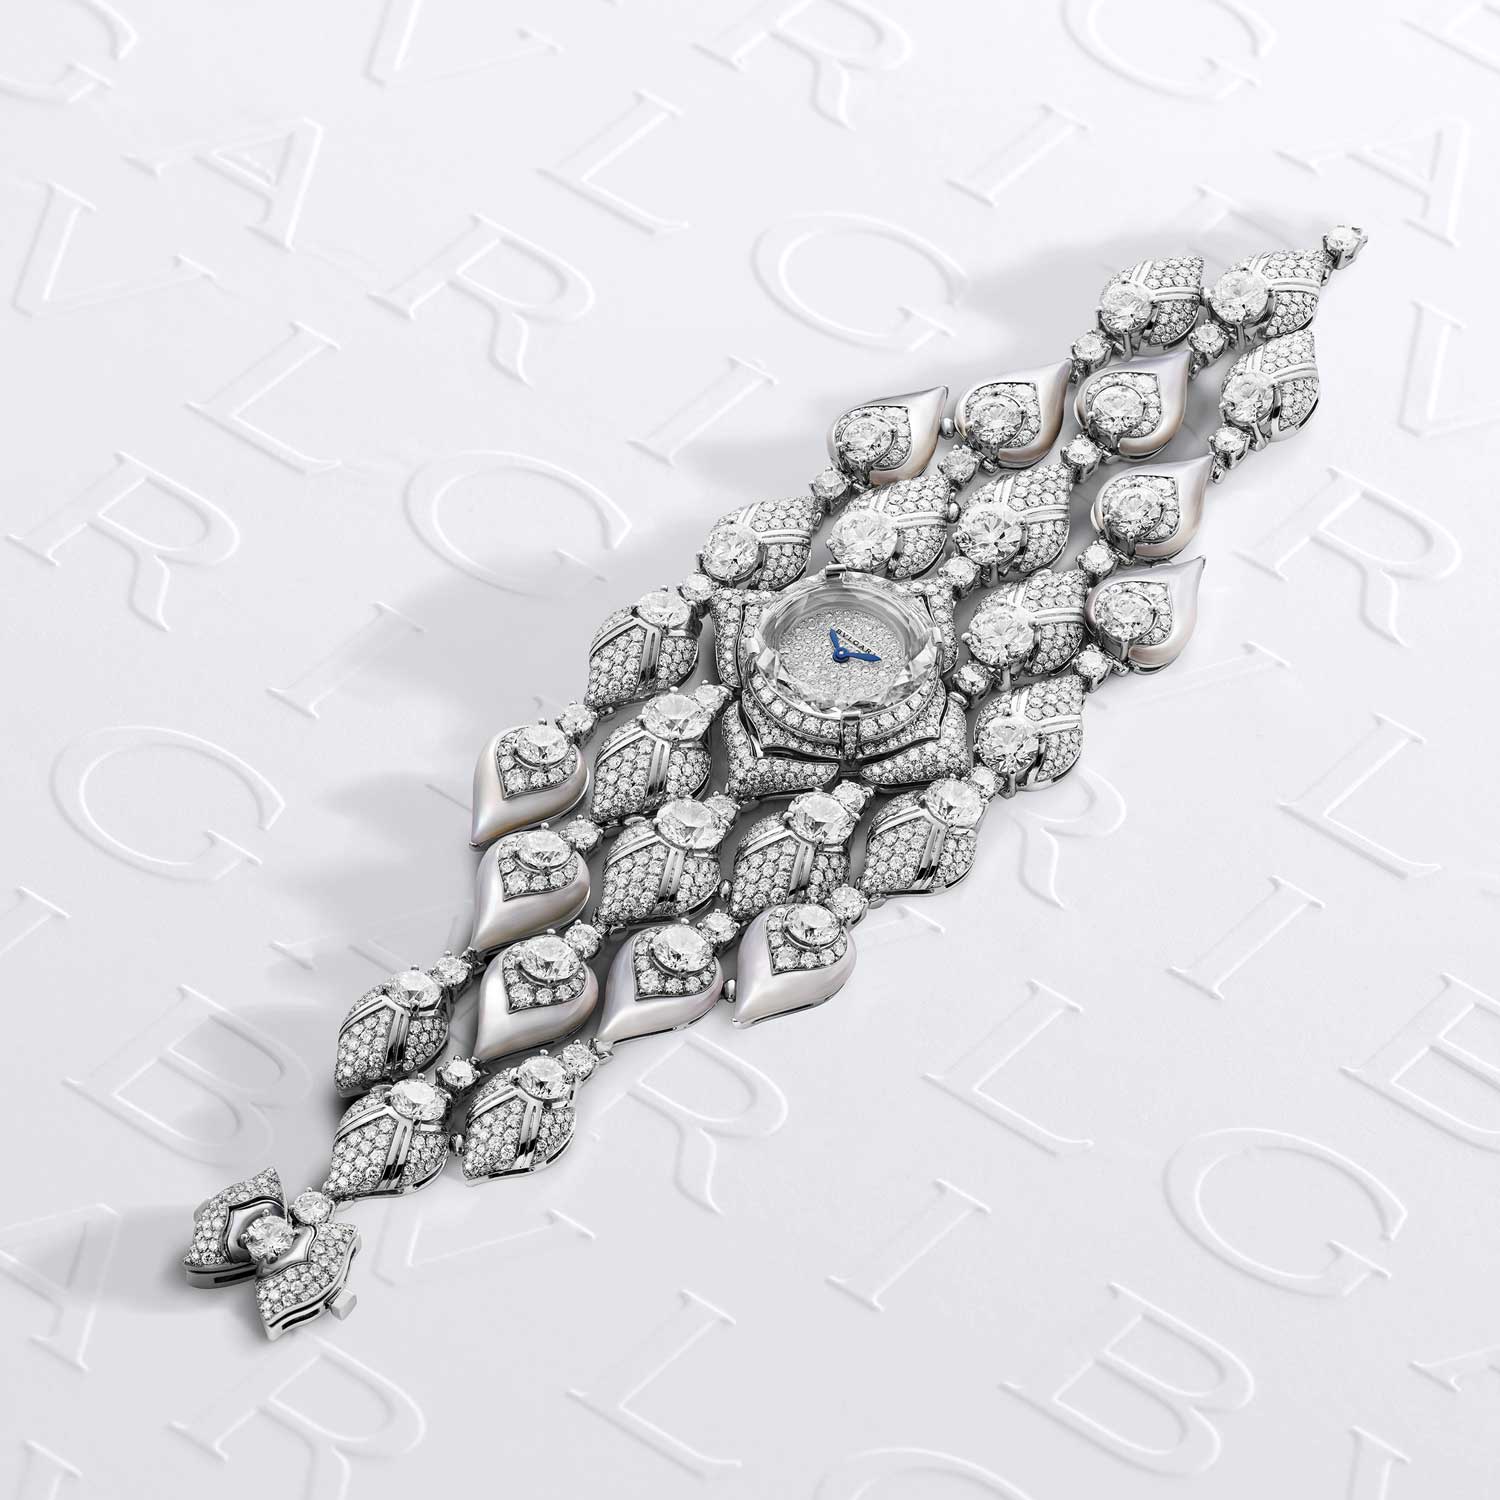 The Diamond Swan watch celebrates the spirit of Art Deco